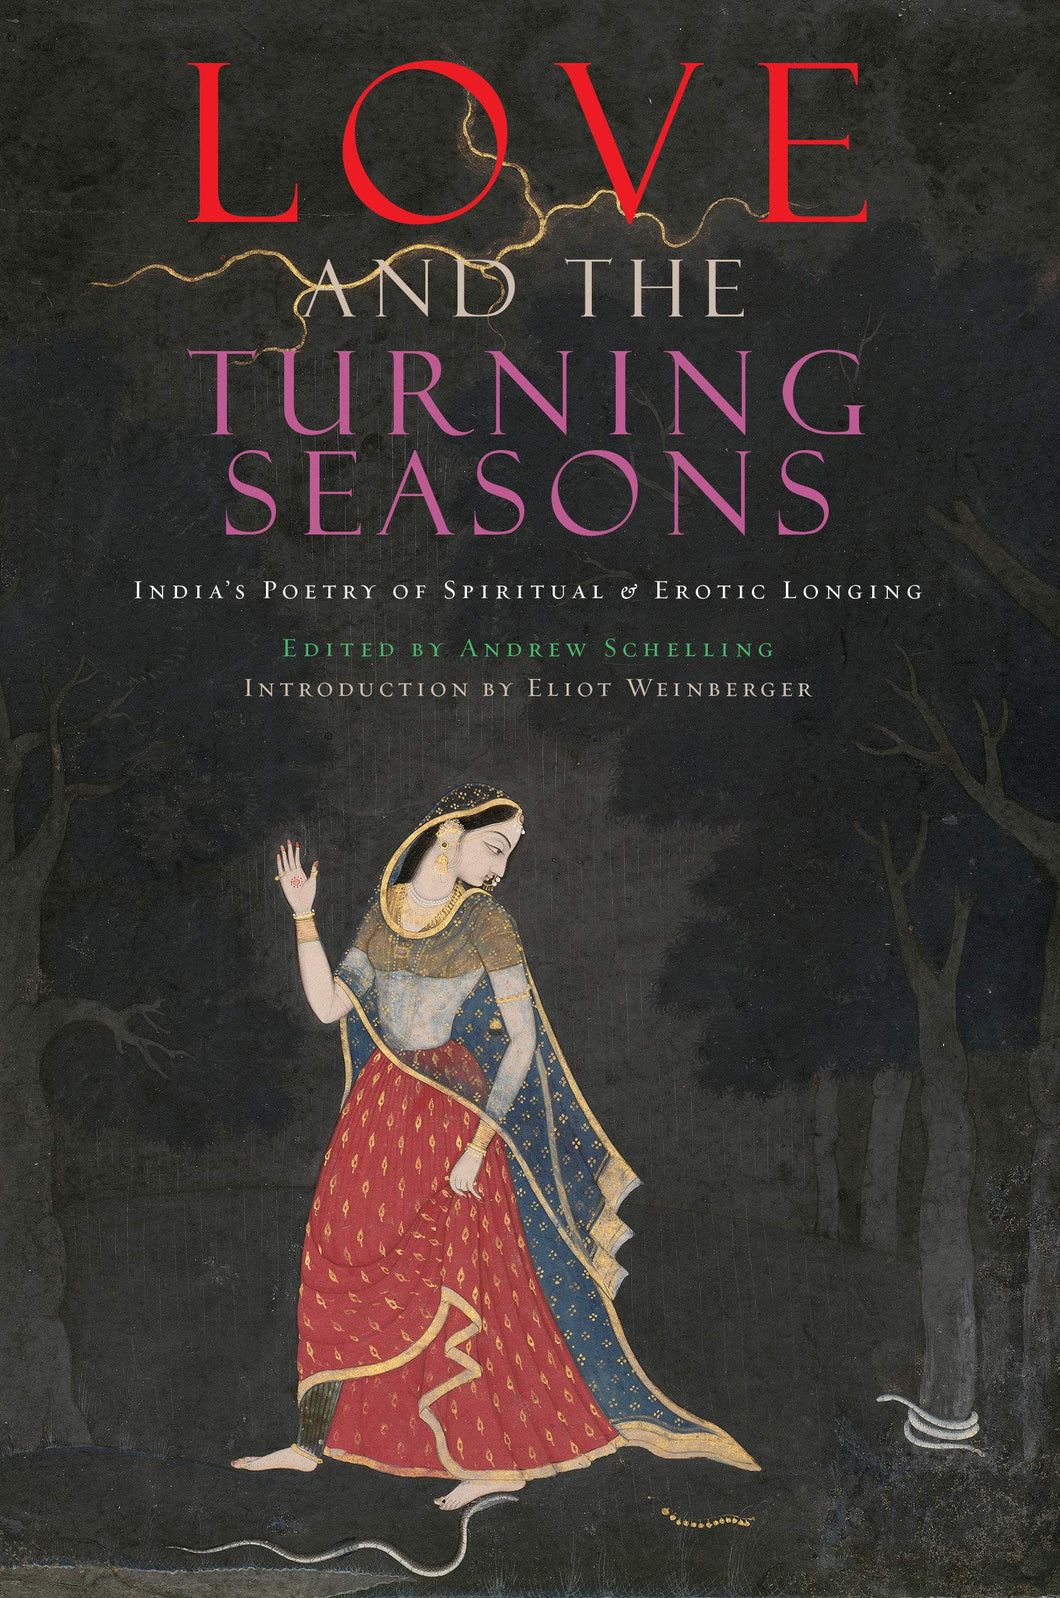 Love and The Turning Seasons : India's Poetry of Spiritual & Erotic Longing (Hardback) ร้านหนังสือและสิ่งของ เป็นร้านหนังสือภาษาอังกฤษหายาก และร้านกาแฟ หรือ บุ๊คคาเฟ่ ตั้งอยู่สุขุมวิท กรุงเทพ